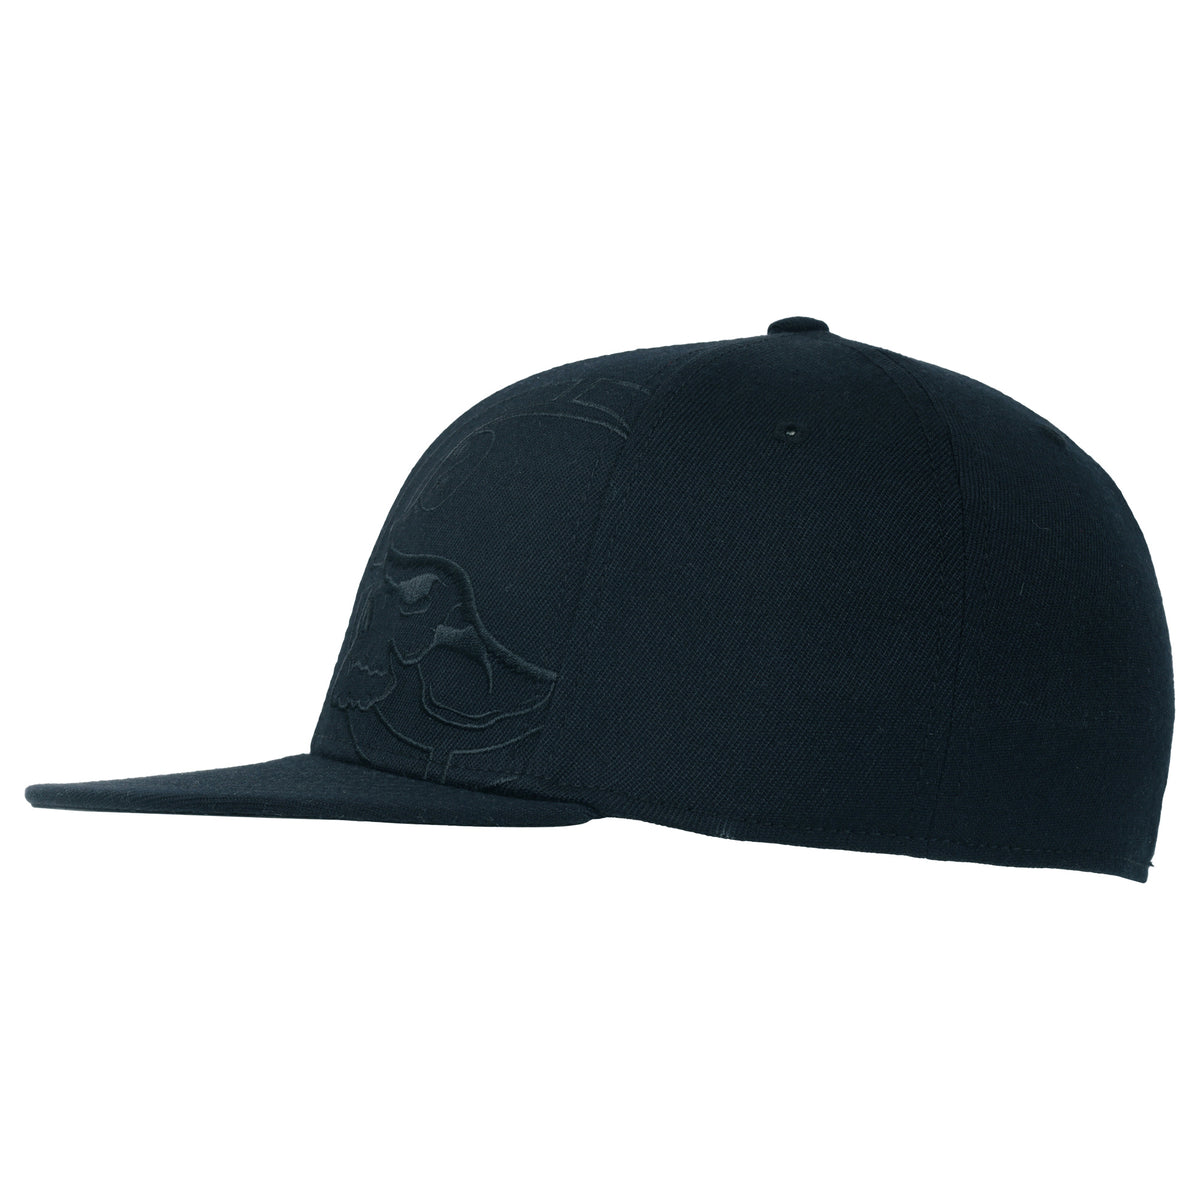 SHADOW STITCH FLEX HAT